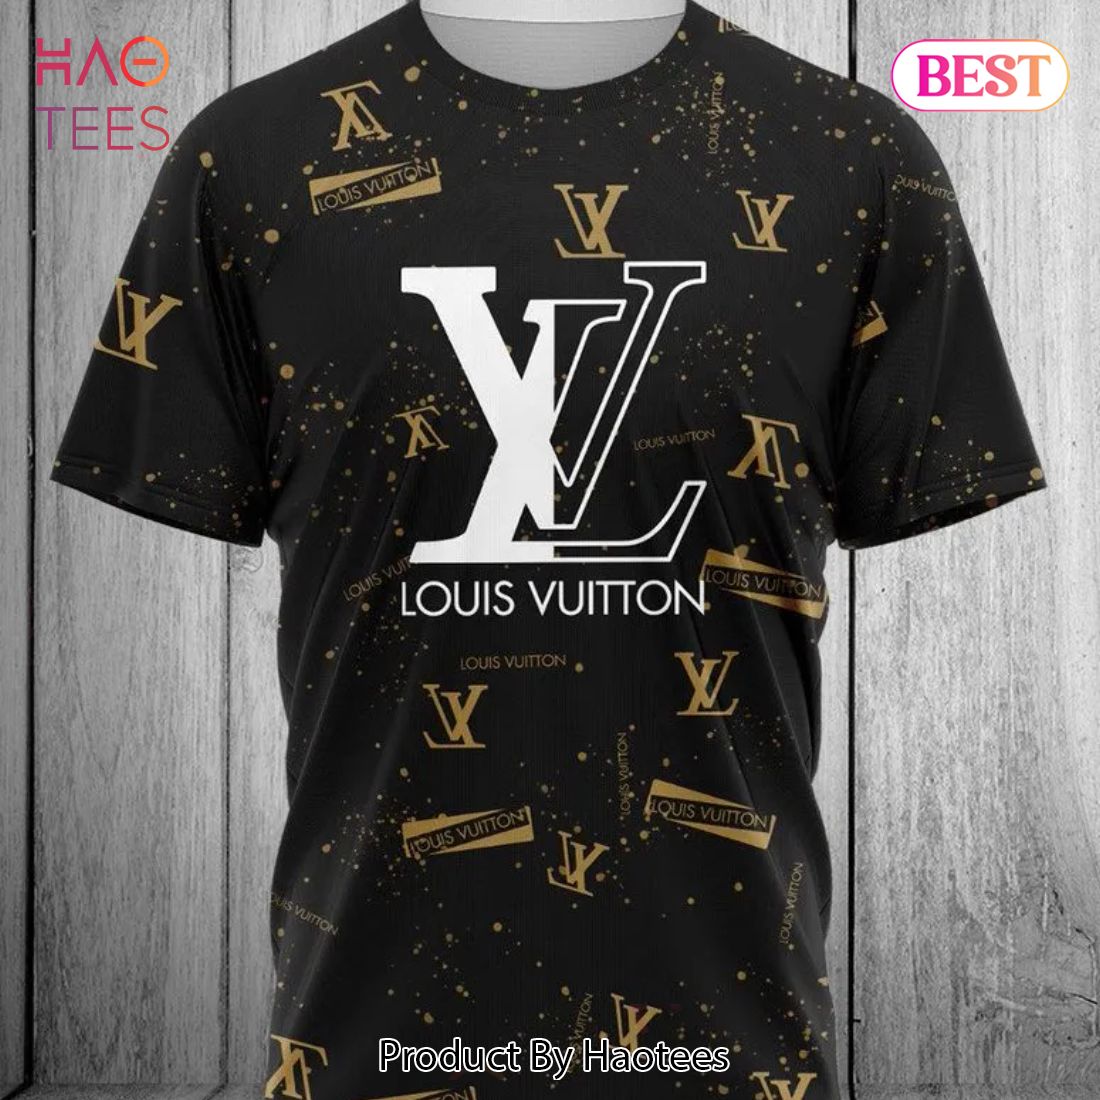 [NEW FASHION] Louis Vuitton New Black Luxury Brand T-Shirt Outfit For Men Women